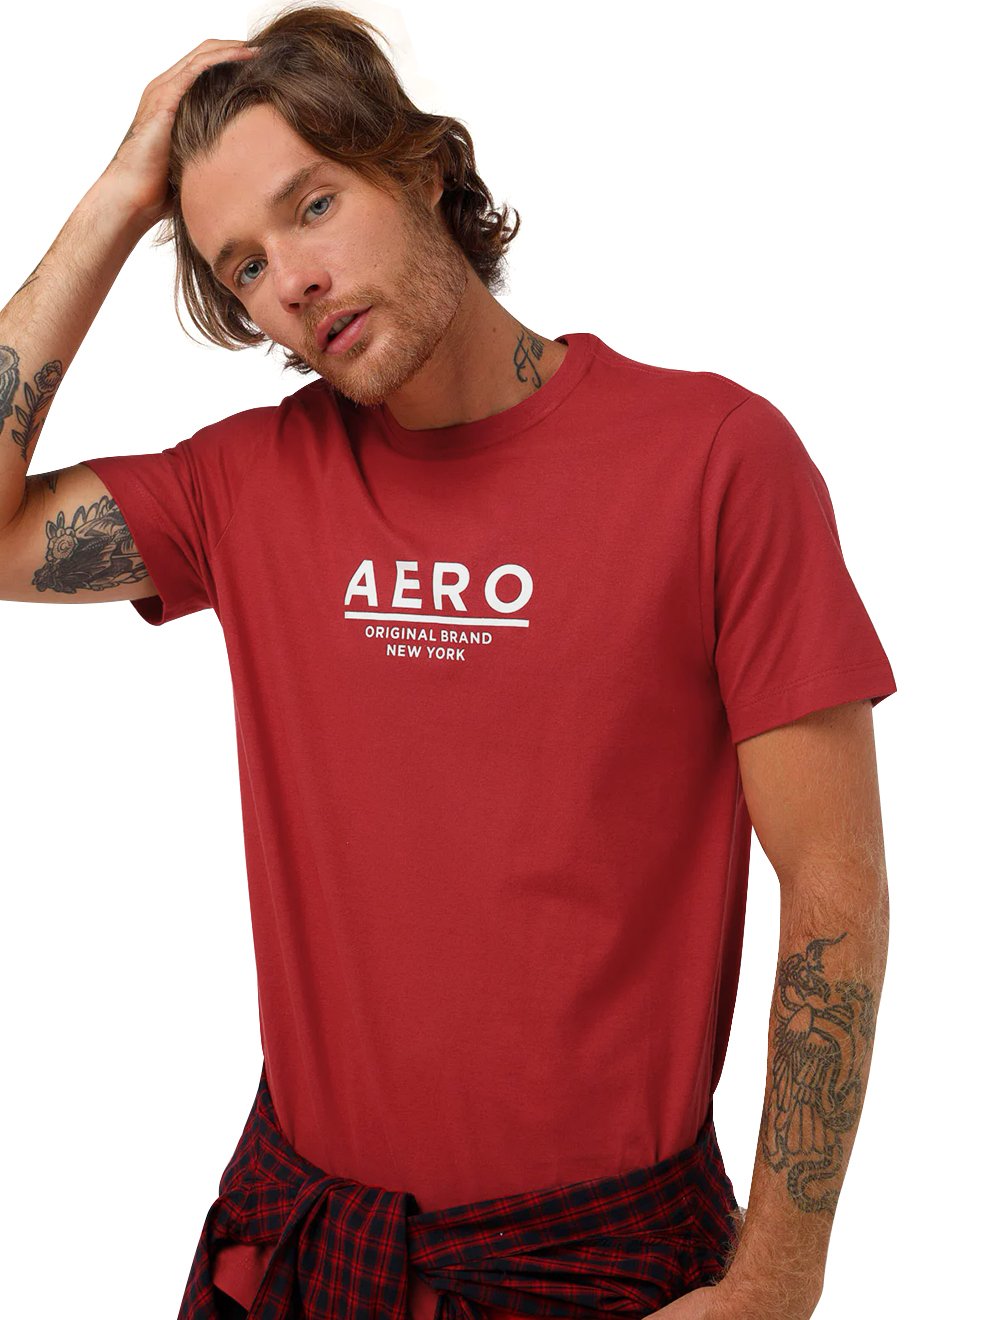 Camiseta Aeropostale Masculina Aero Original Brand New York Vermelha